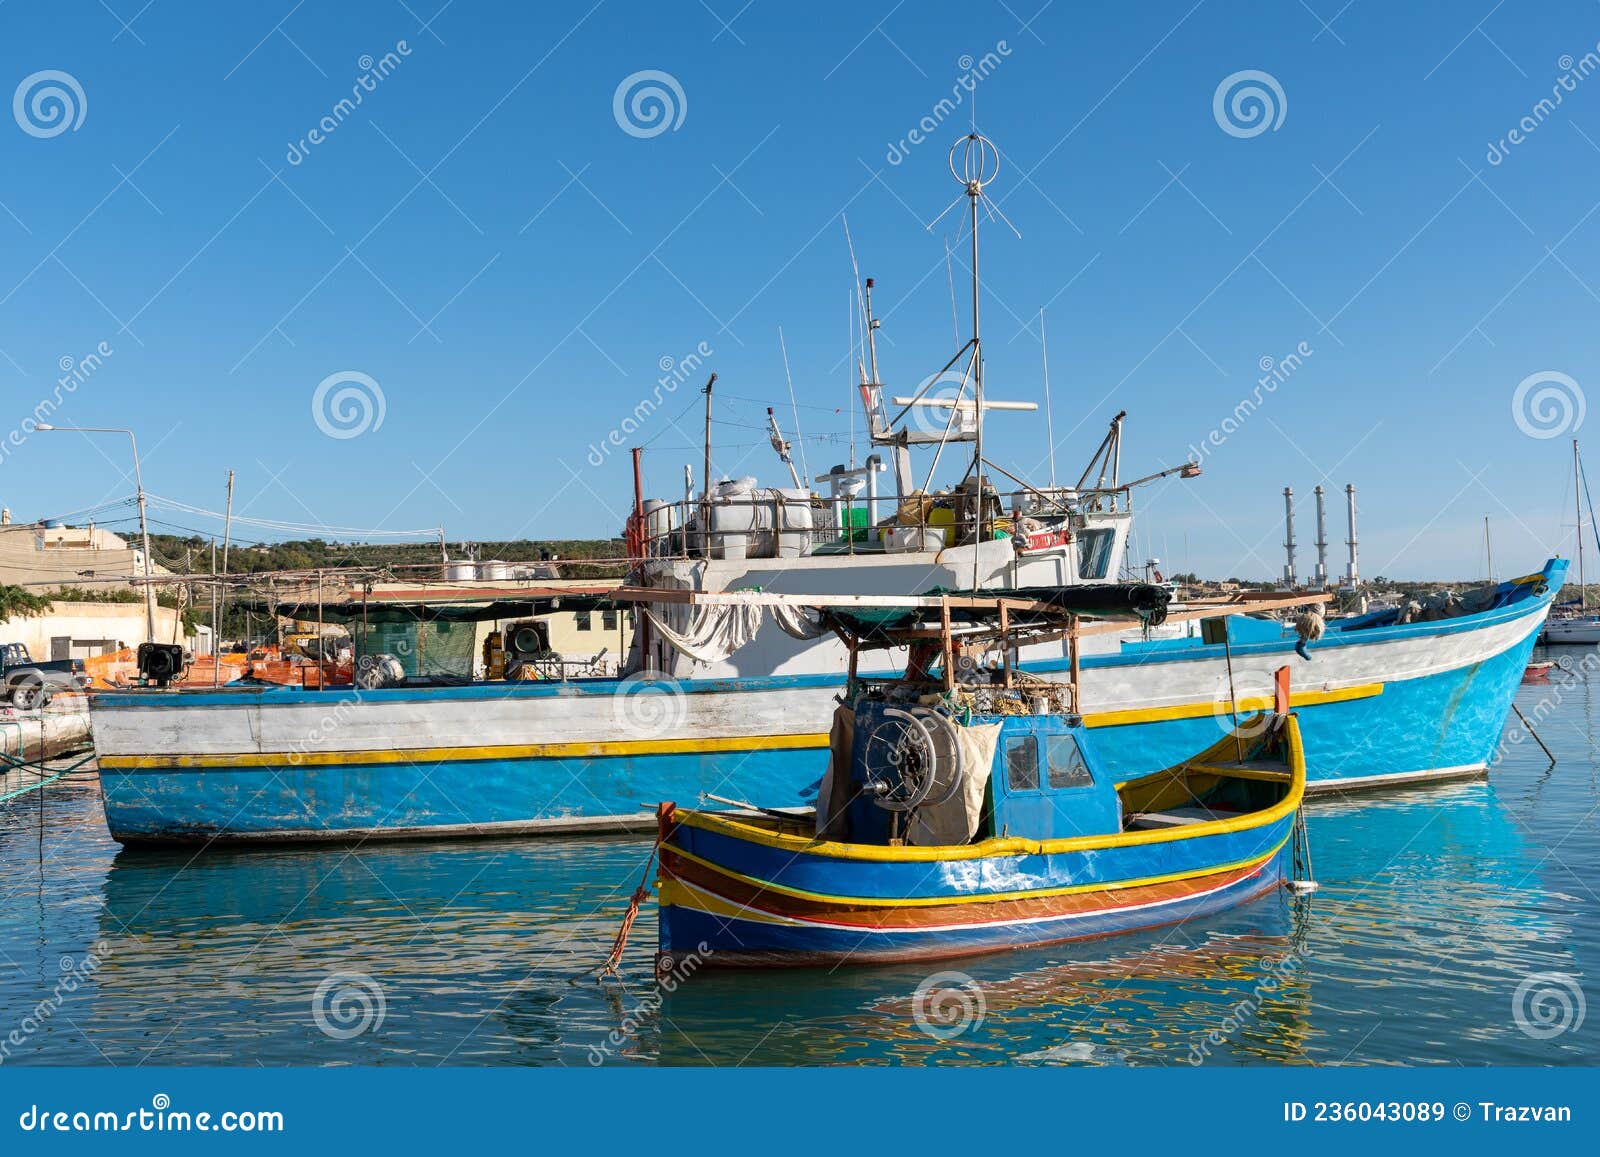 traditional maltese fishing vessels